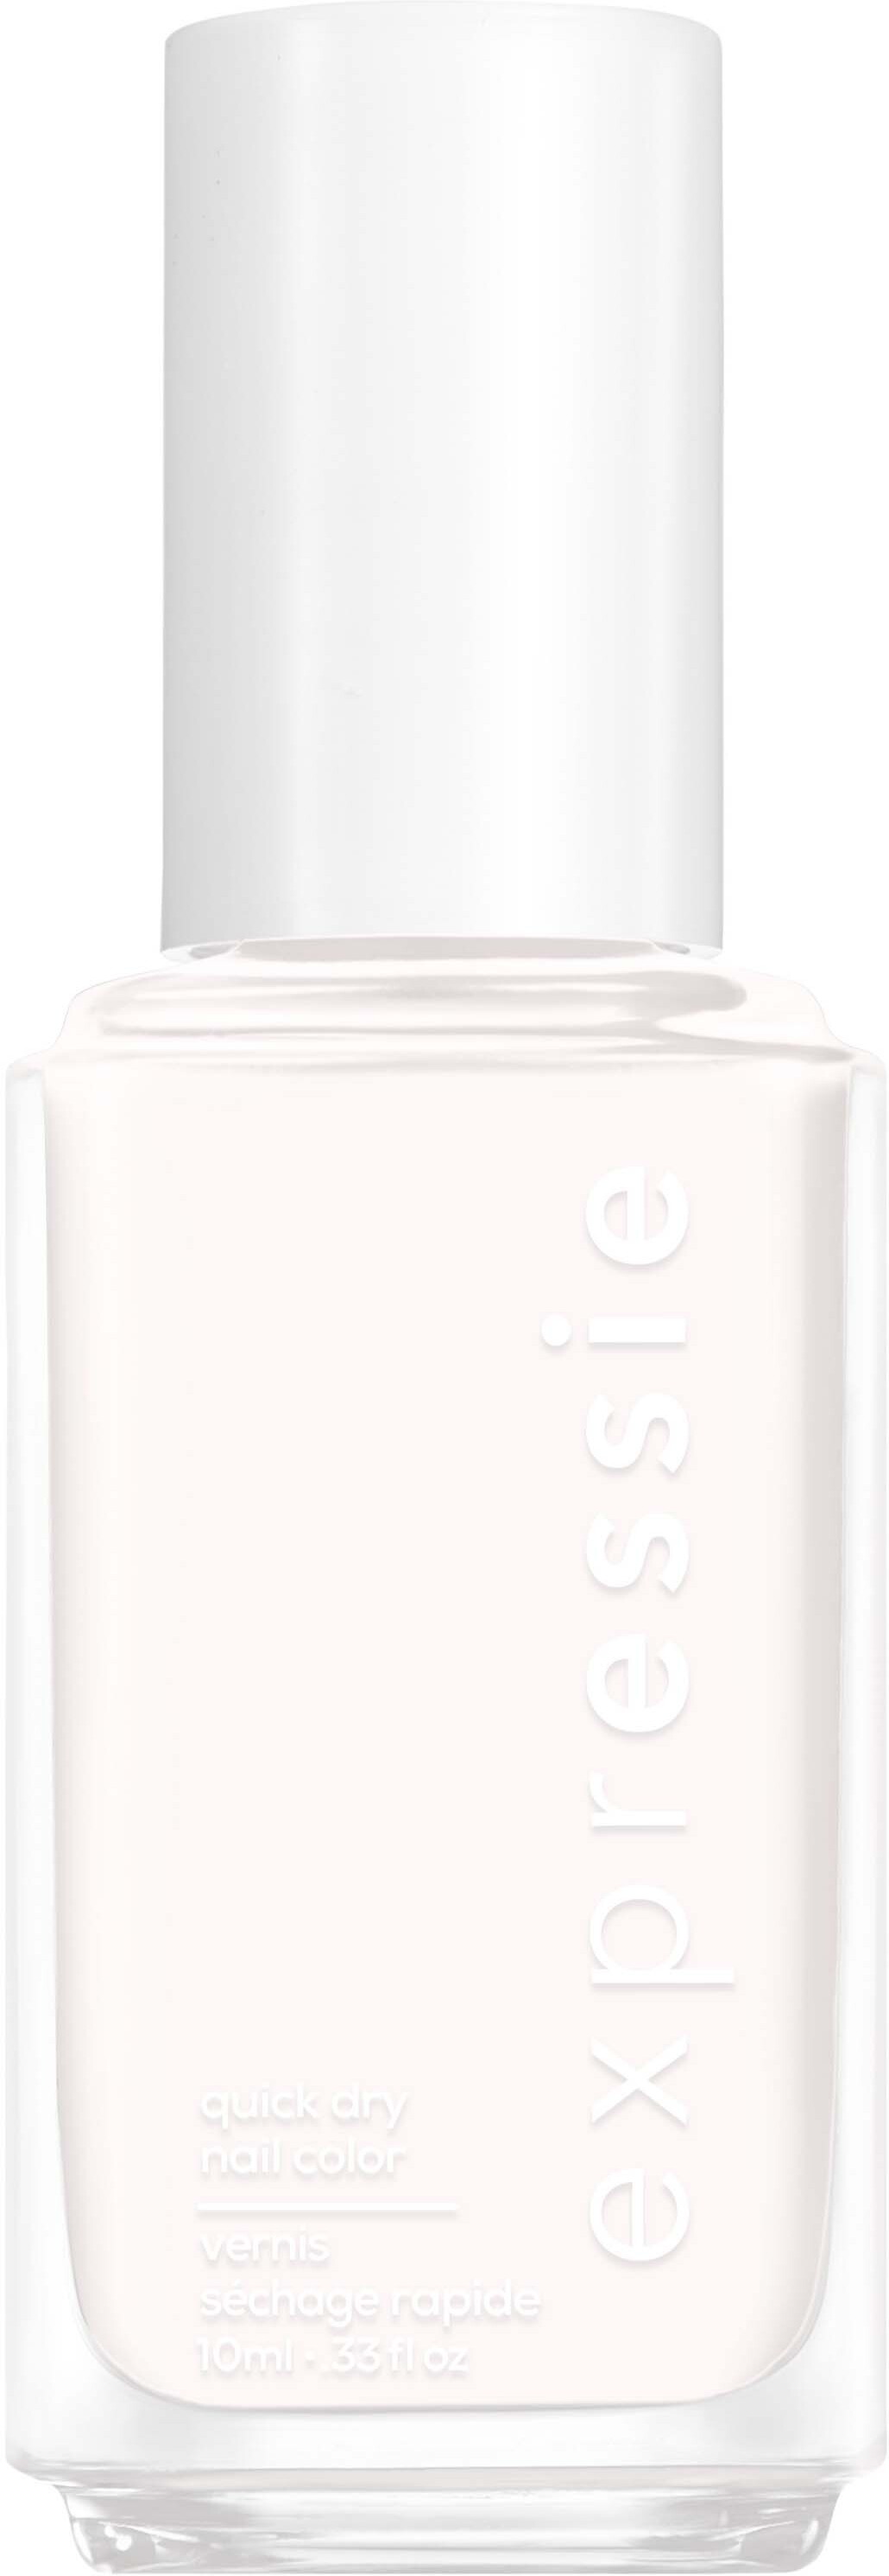 Essie Expressie Quick Dry Nail Color 500 Unapologetic Icon